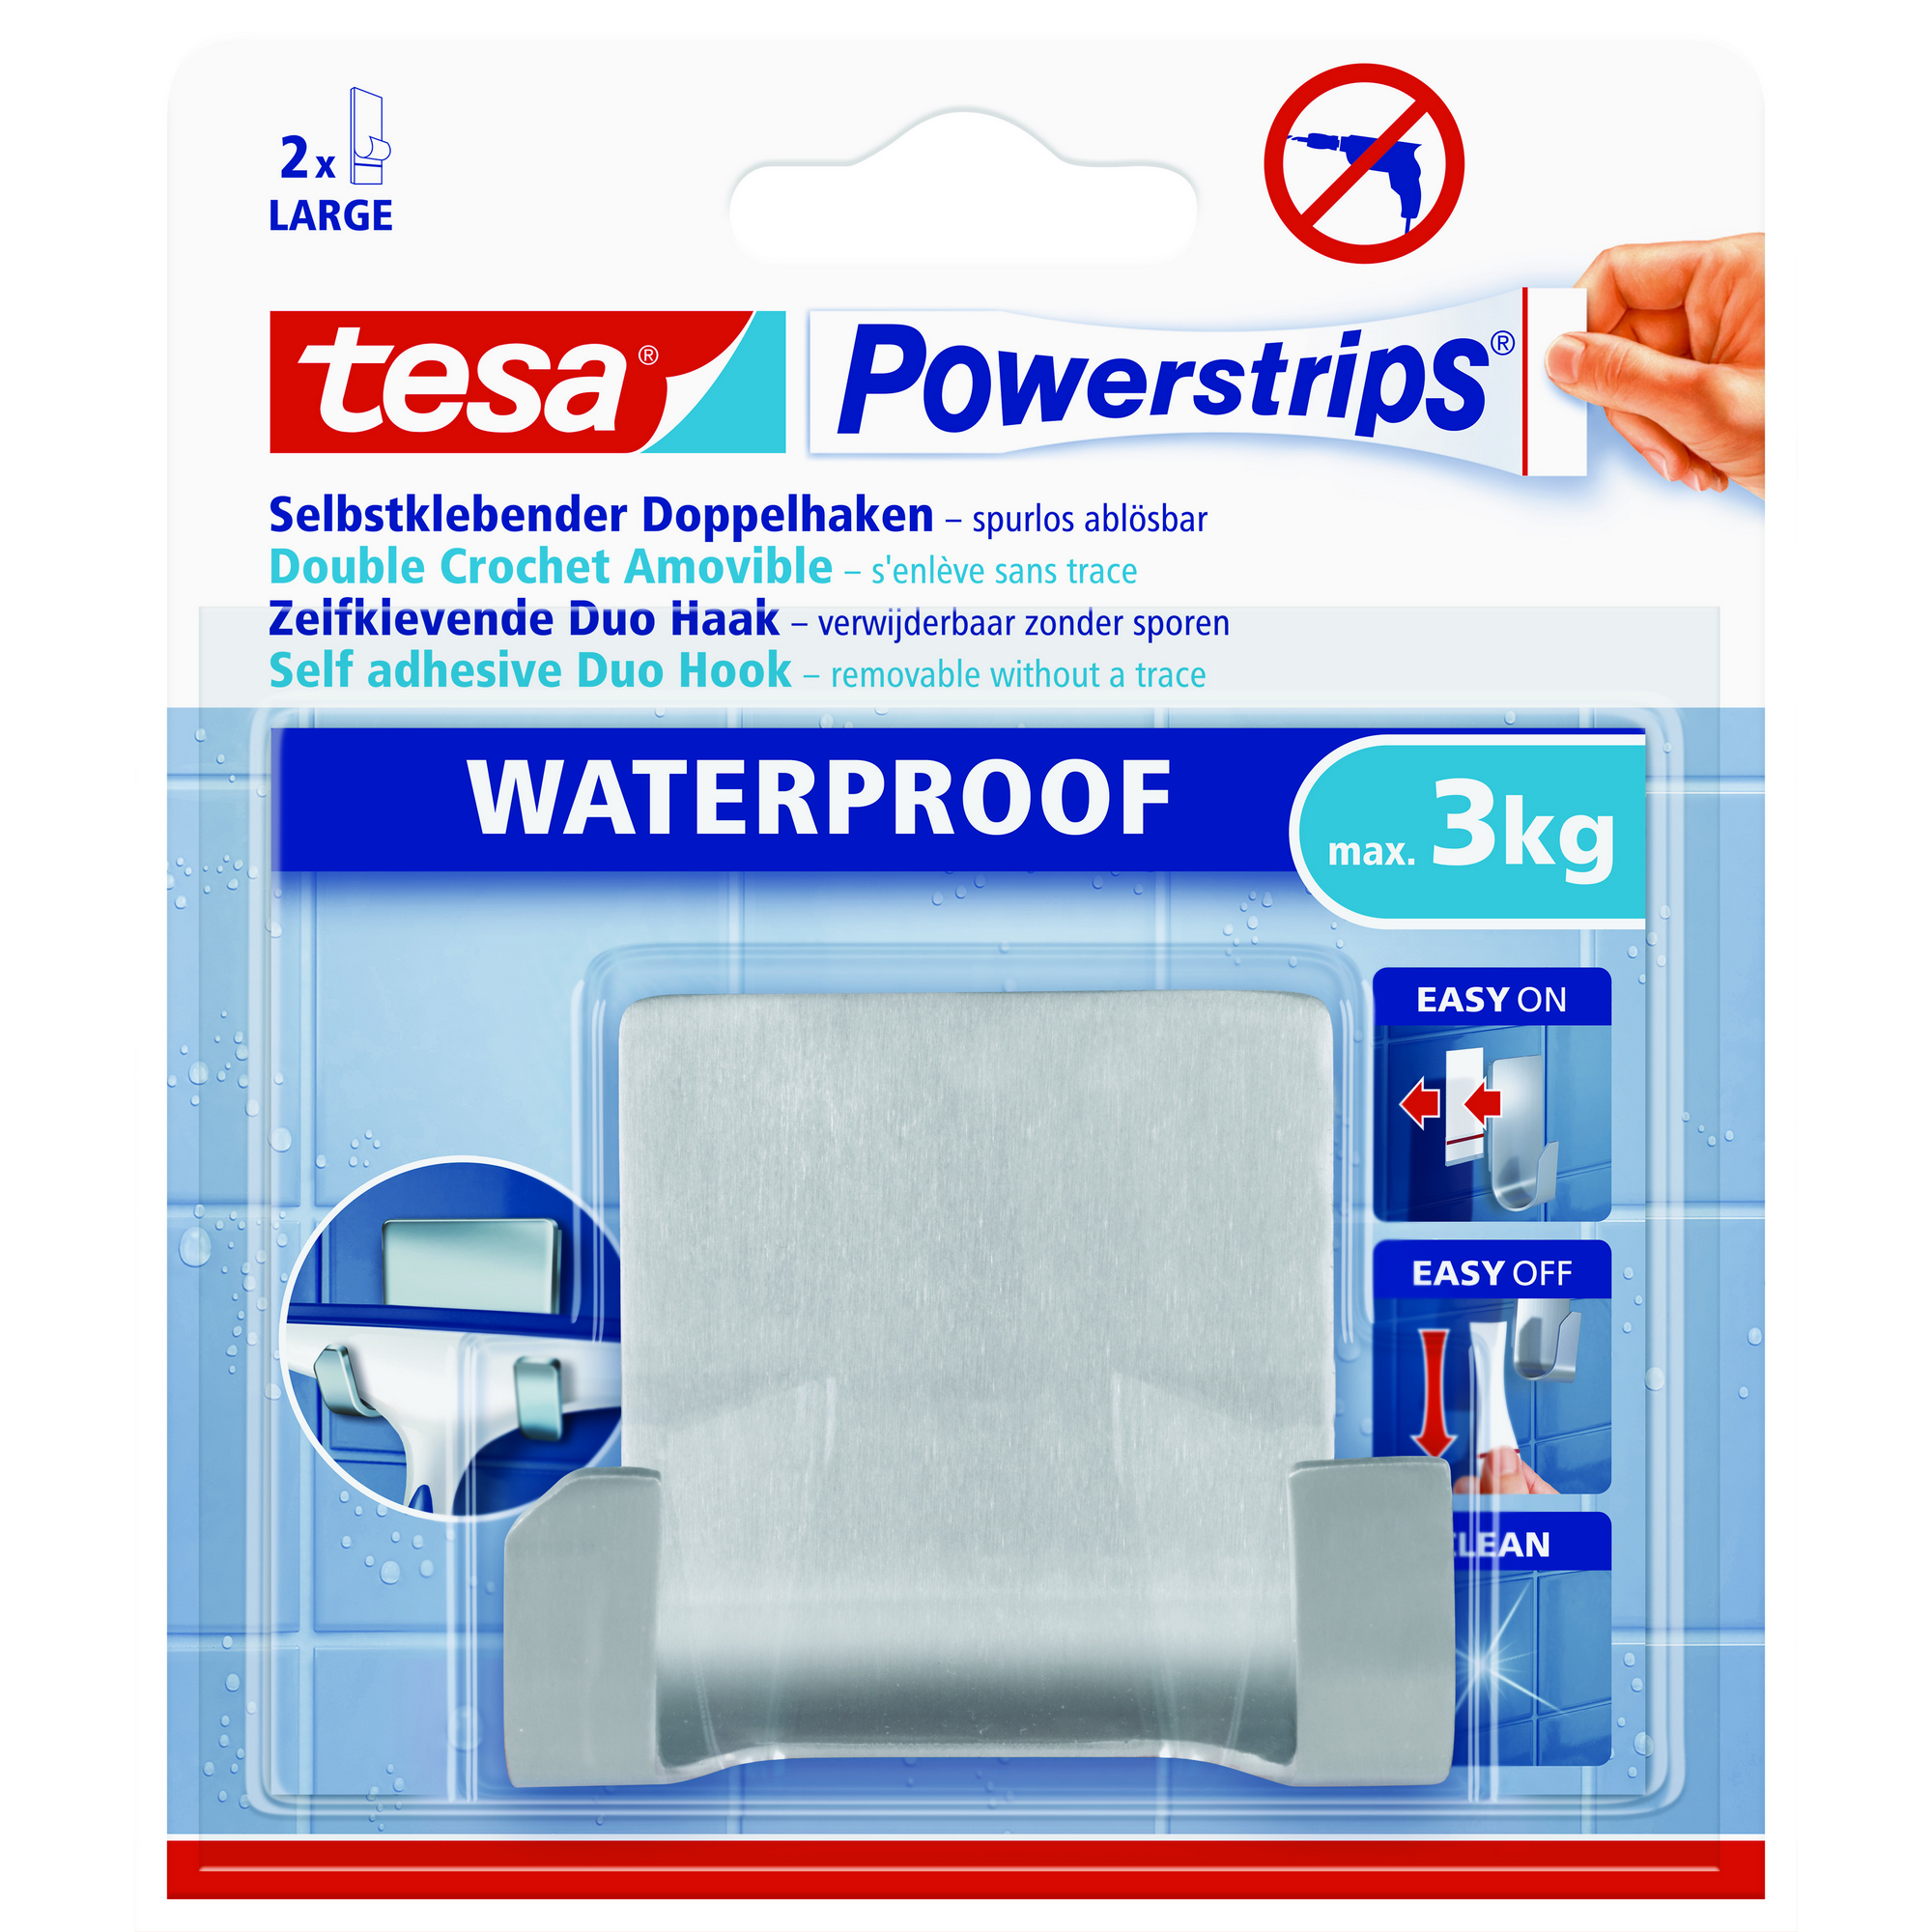 2 x tesa Powerstrips selbstklebener Doppelhaken waterproof Edelstahl bis max. 